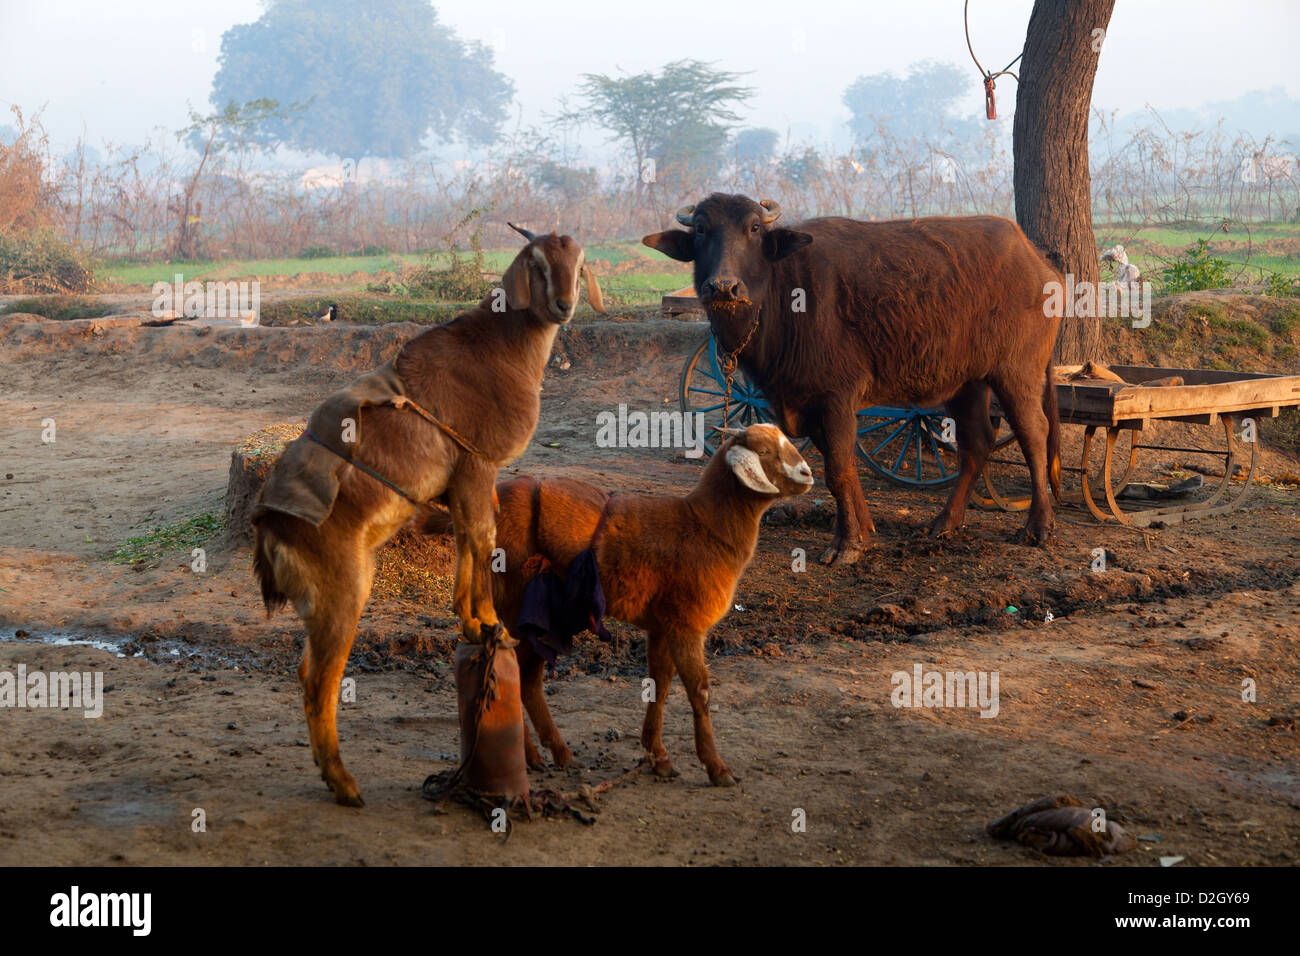 India, Uttar Pradesh, Agra, Farmyard animals in farm area Stock Photo